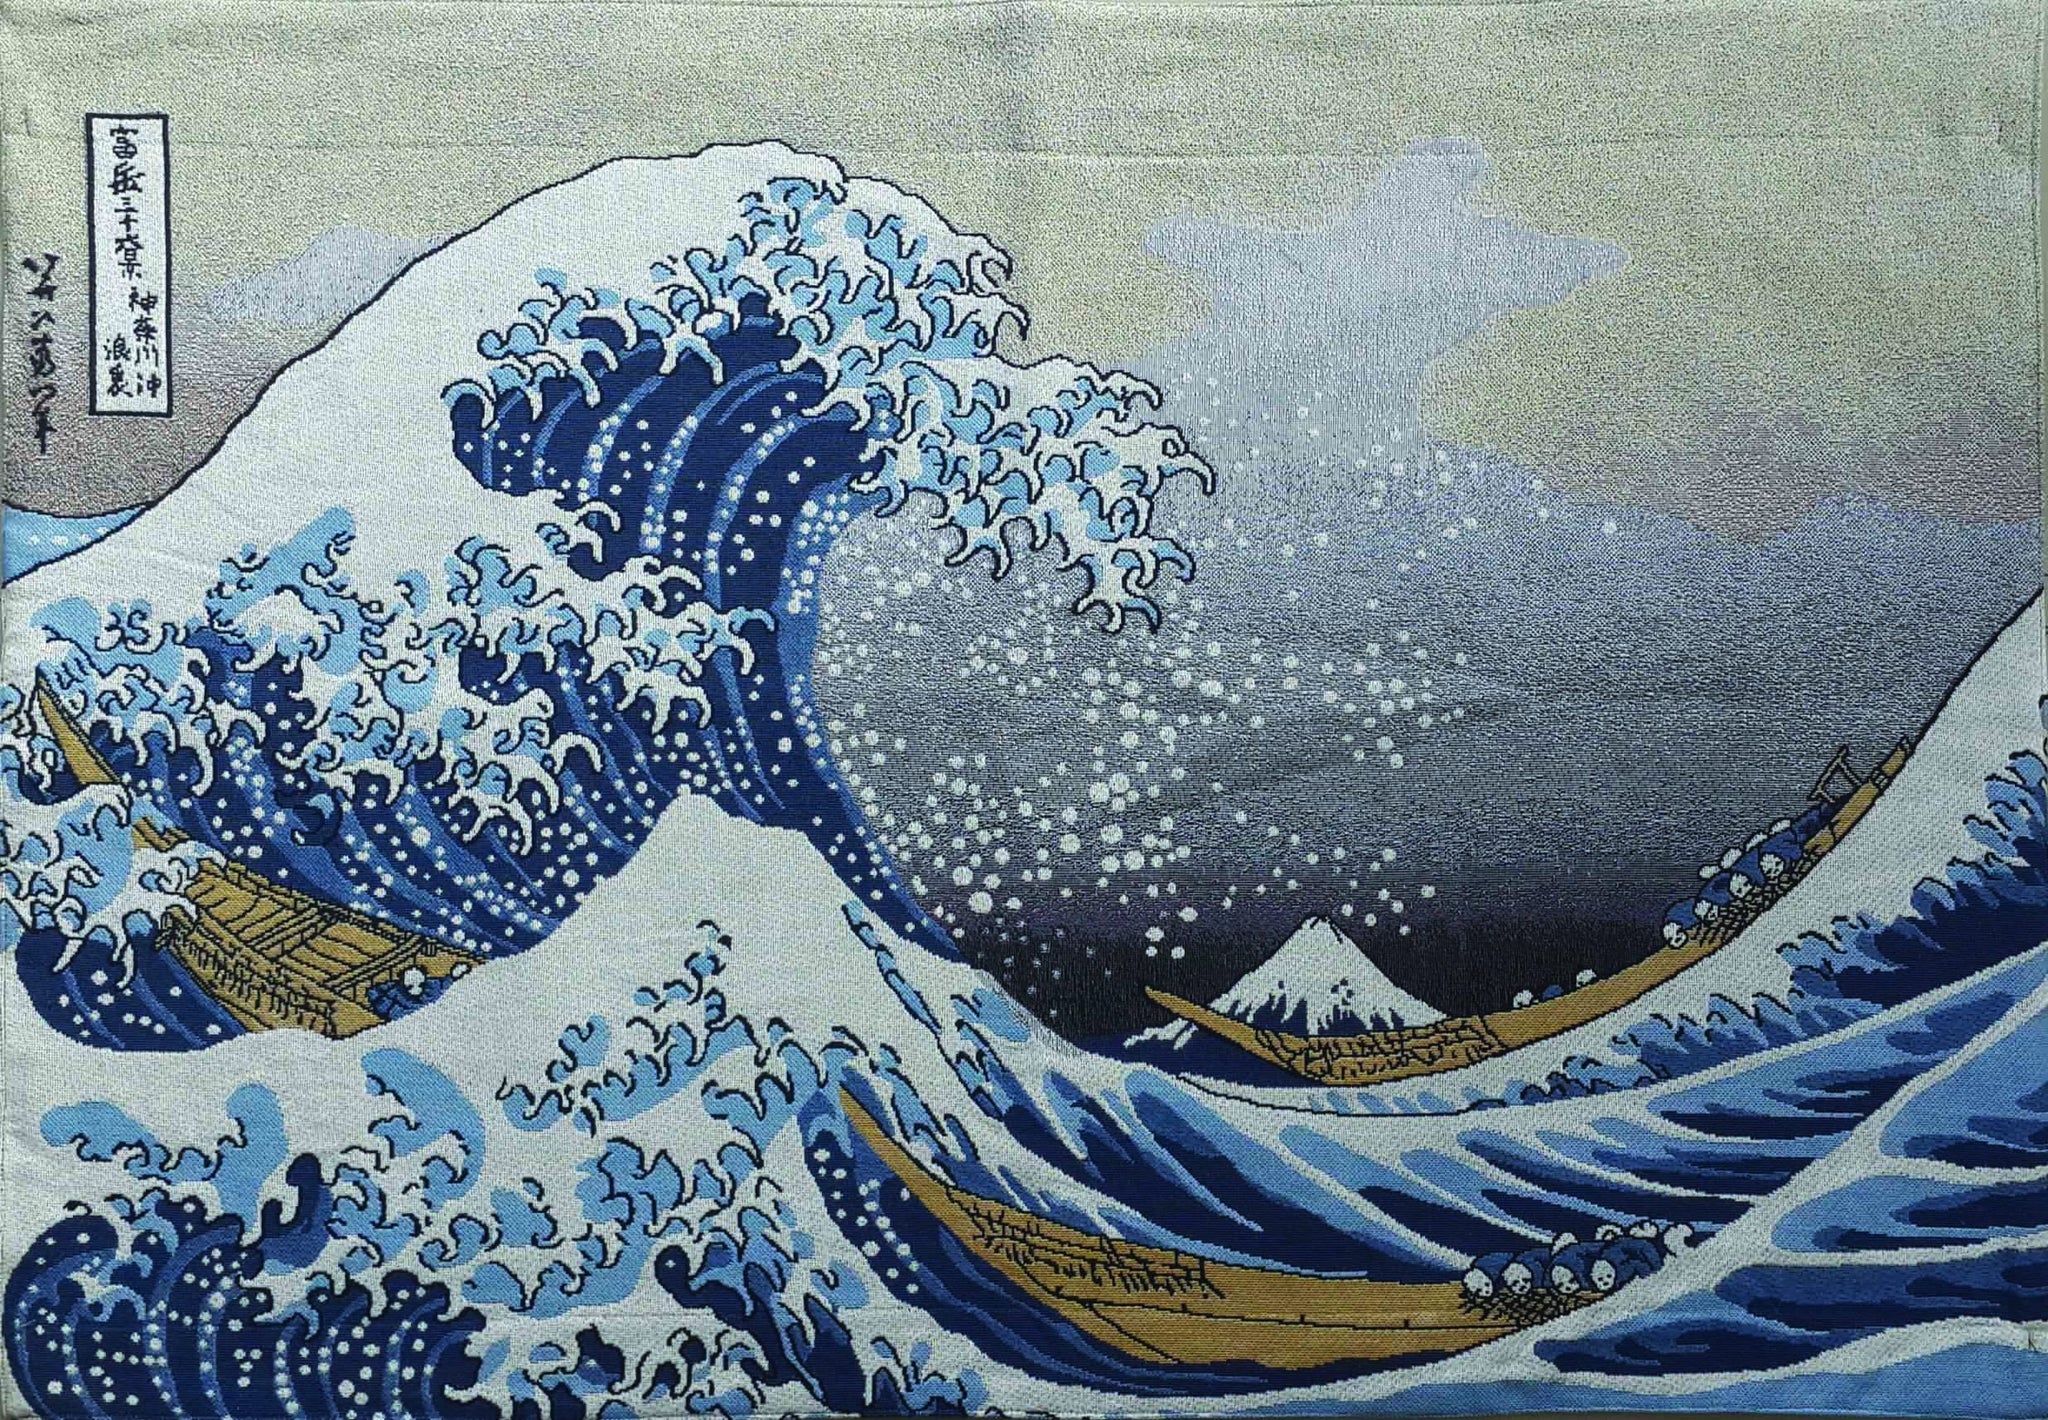 WH-JP-GWK | HOKUSAI GREAT WAVE OFF  KANAGAWA 39 X 27 " INCH WALL HANGING TAPESTRY ART - www.signareusa.com